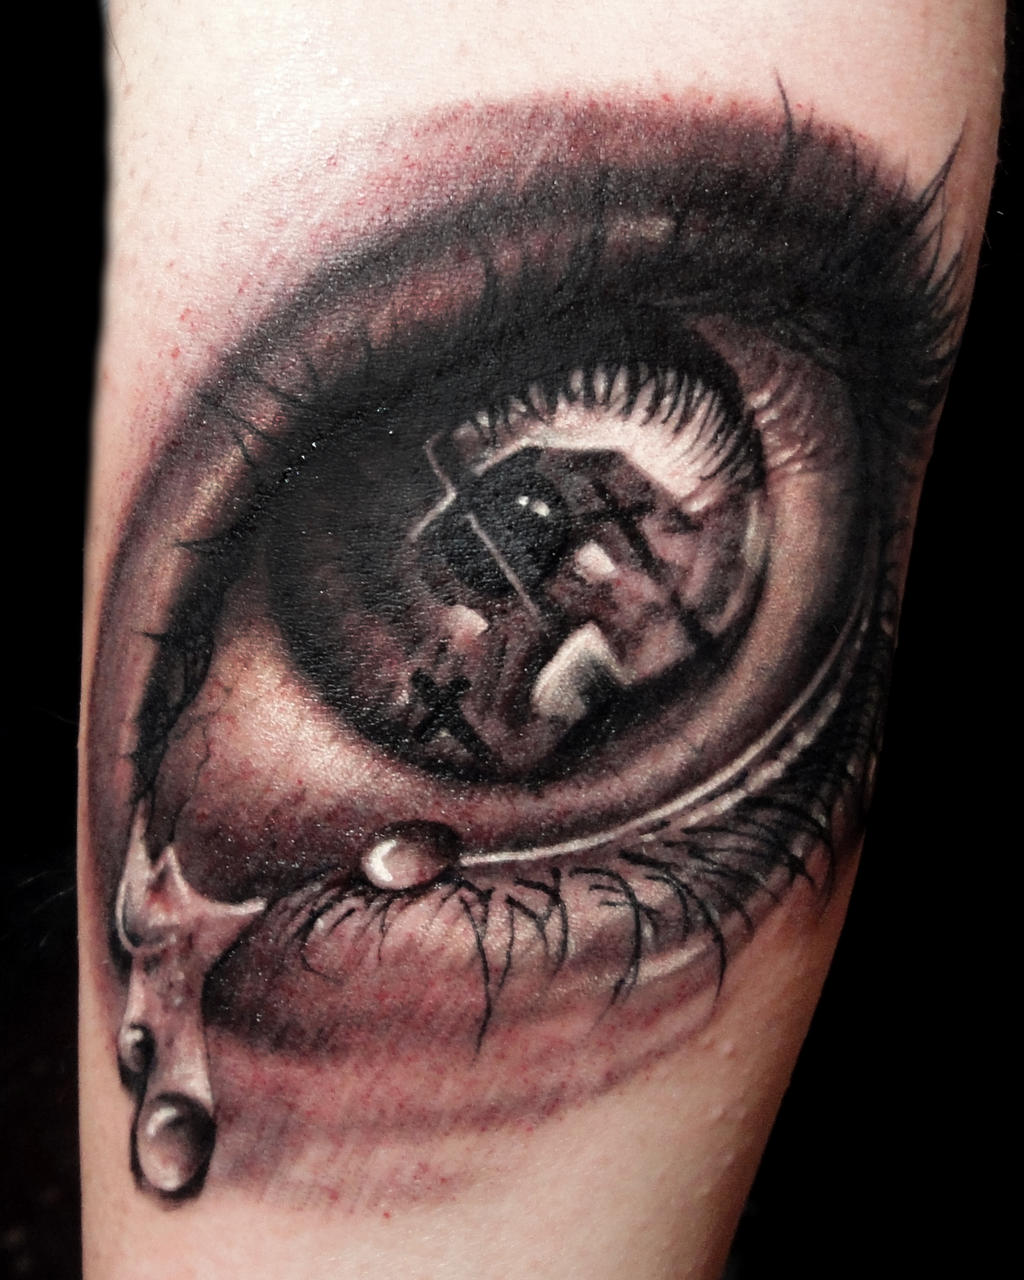 Cross Eye Tattoo by DanielPokorny on DeviantArt